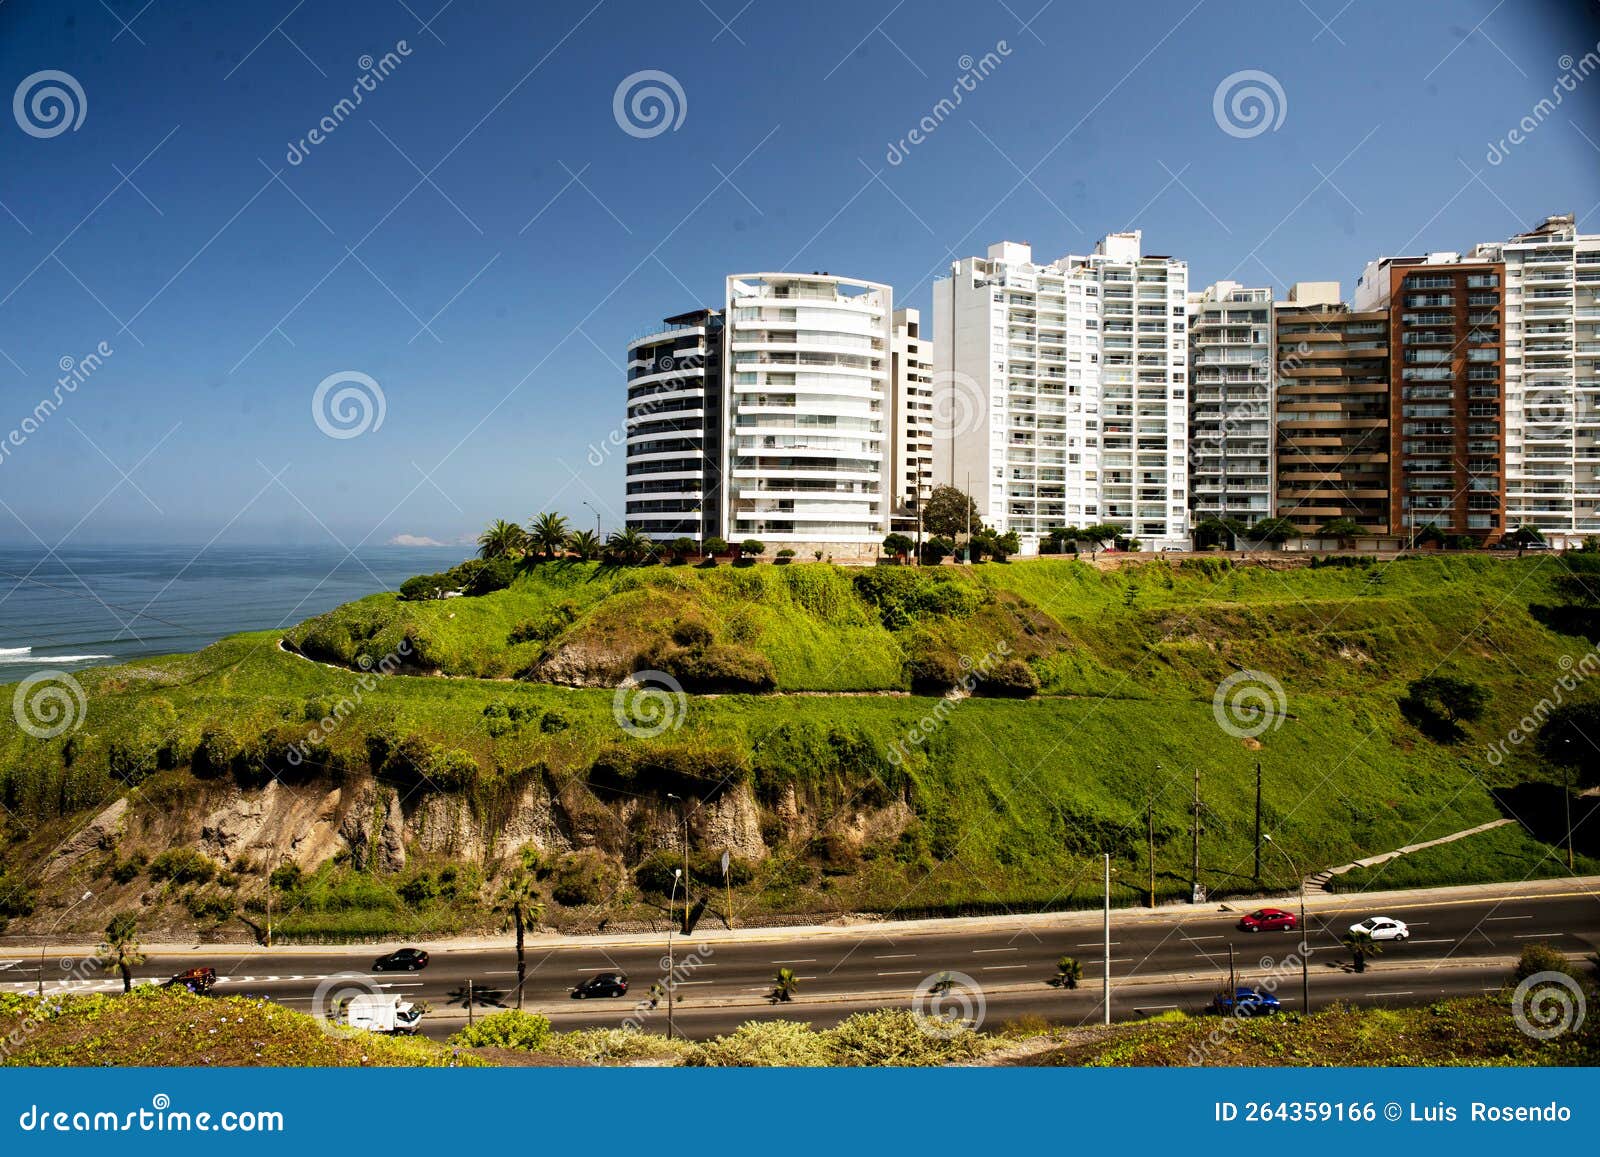 miraflores peru-bajada armendaris- with luxurious buildings and highway on the green coast june 2018-pacific ocean and splendid